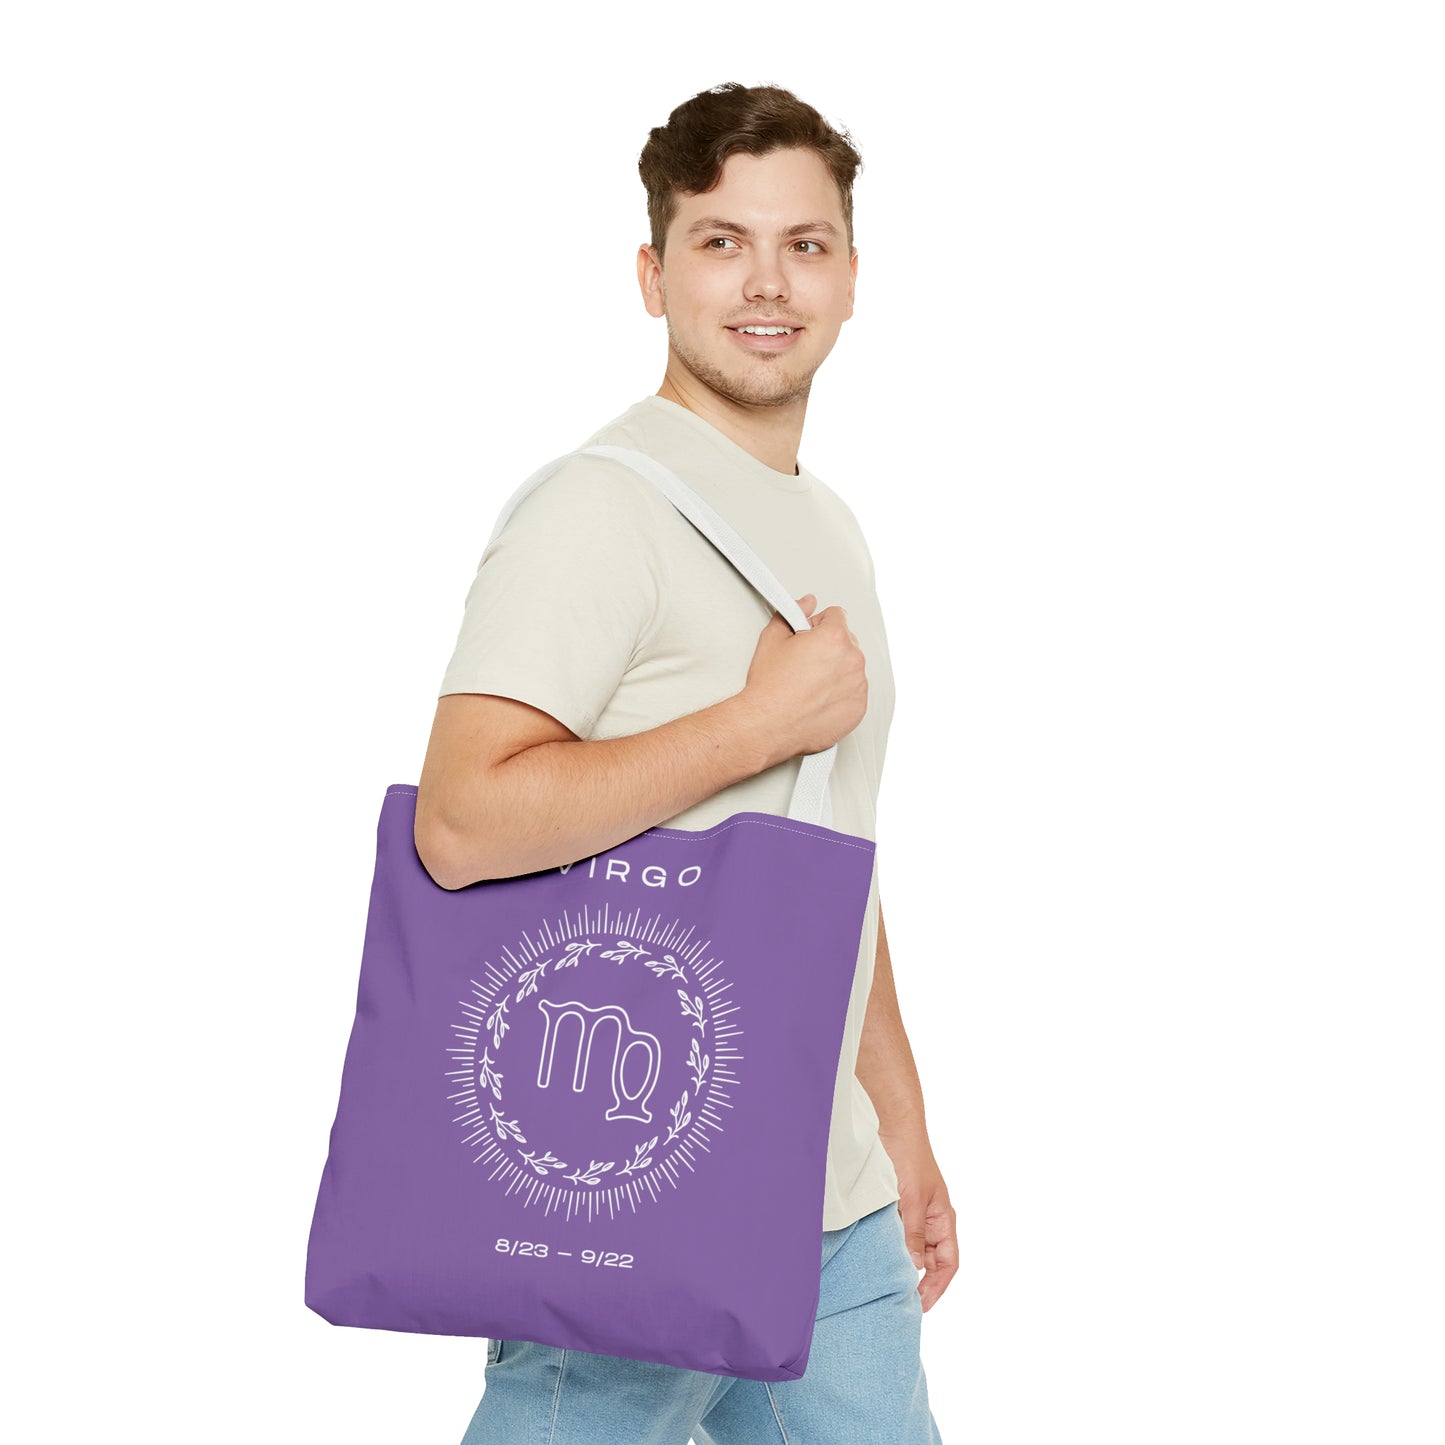 Virgo Tote Bag, Purple